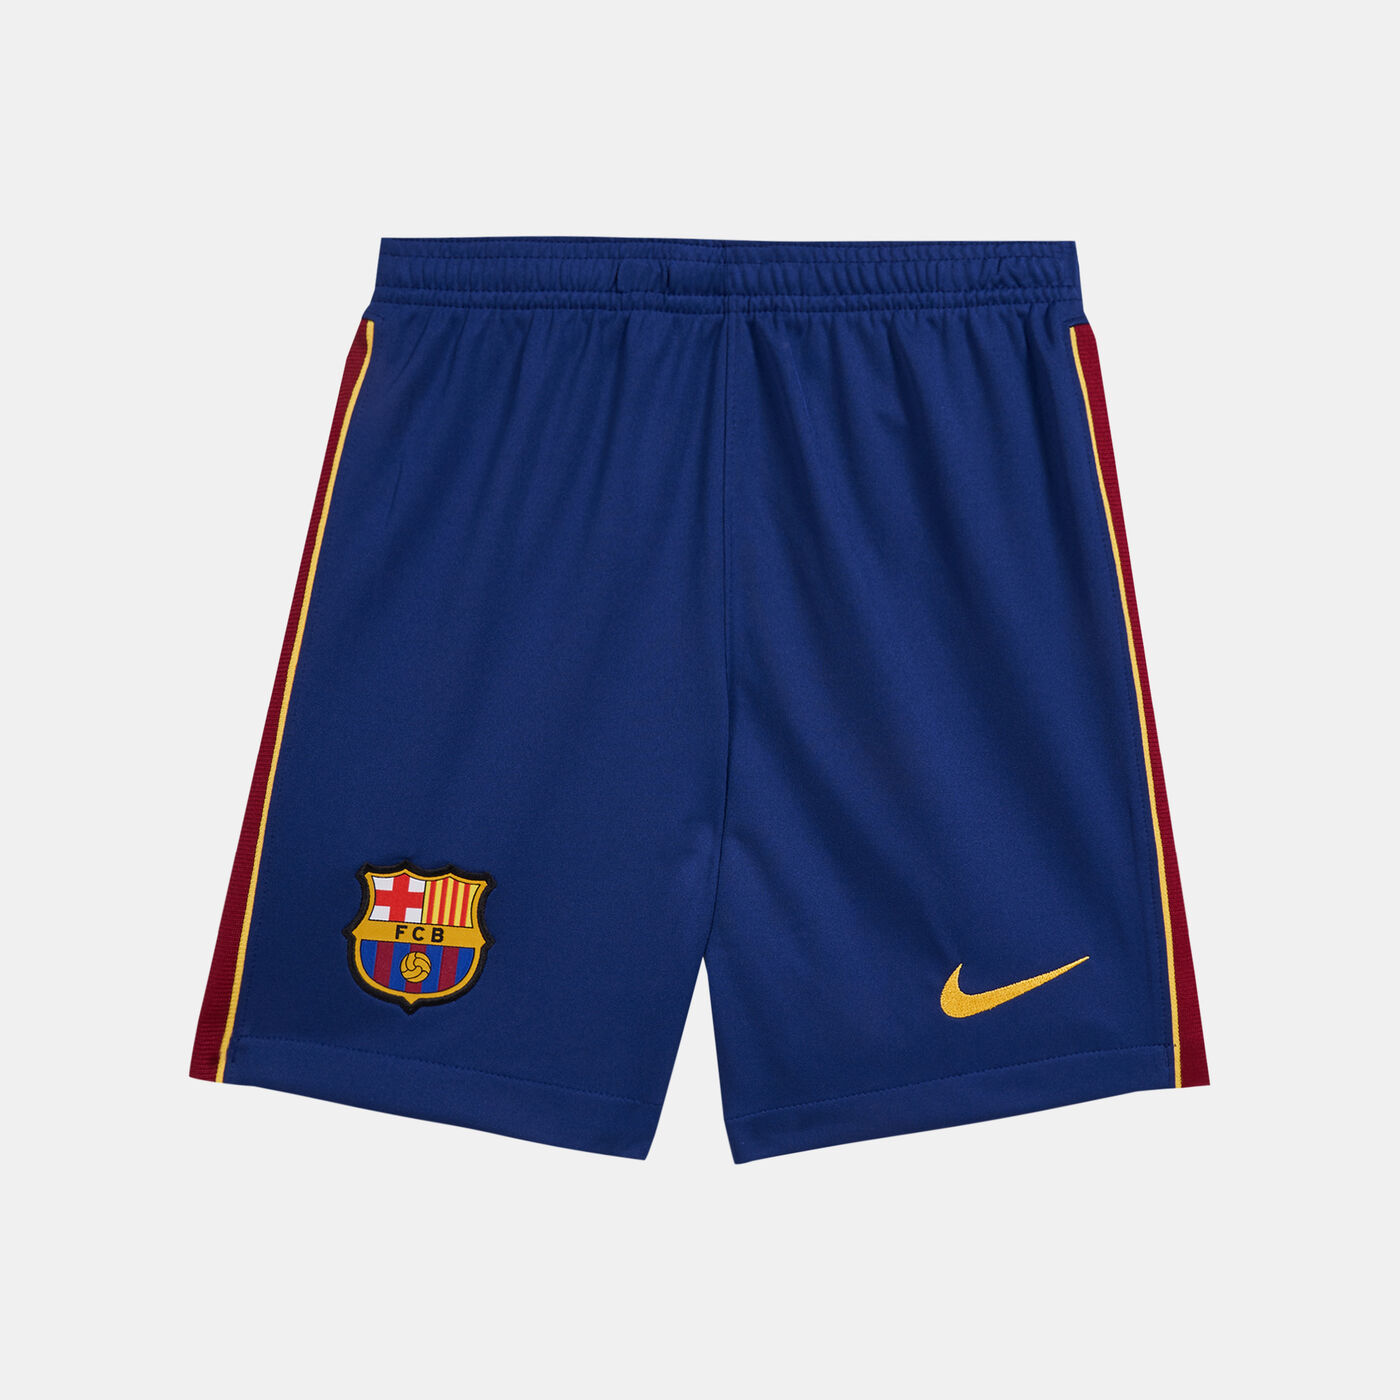 Kids' FC Barcelona Stadium Home/Away Shorts - 2020/21 (Older Kids)